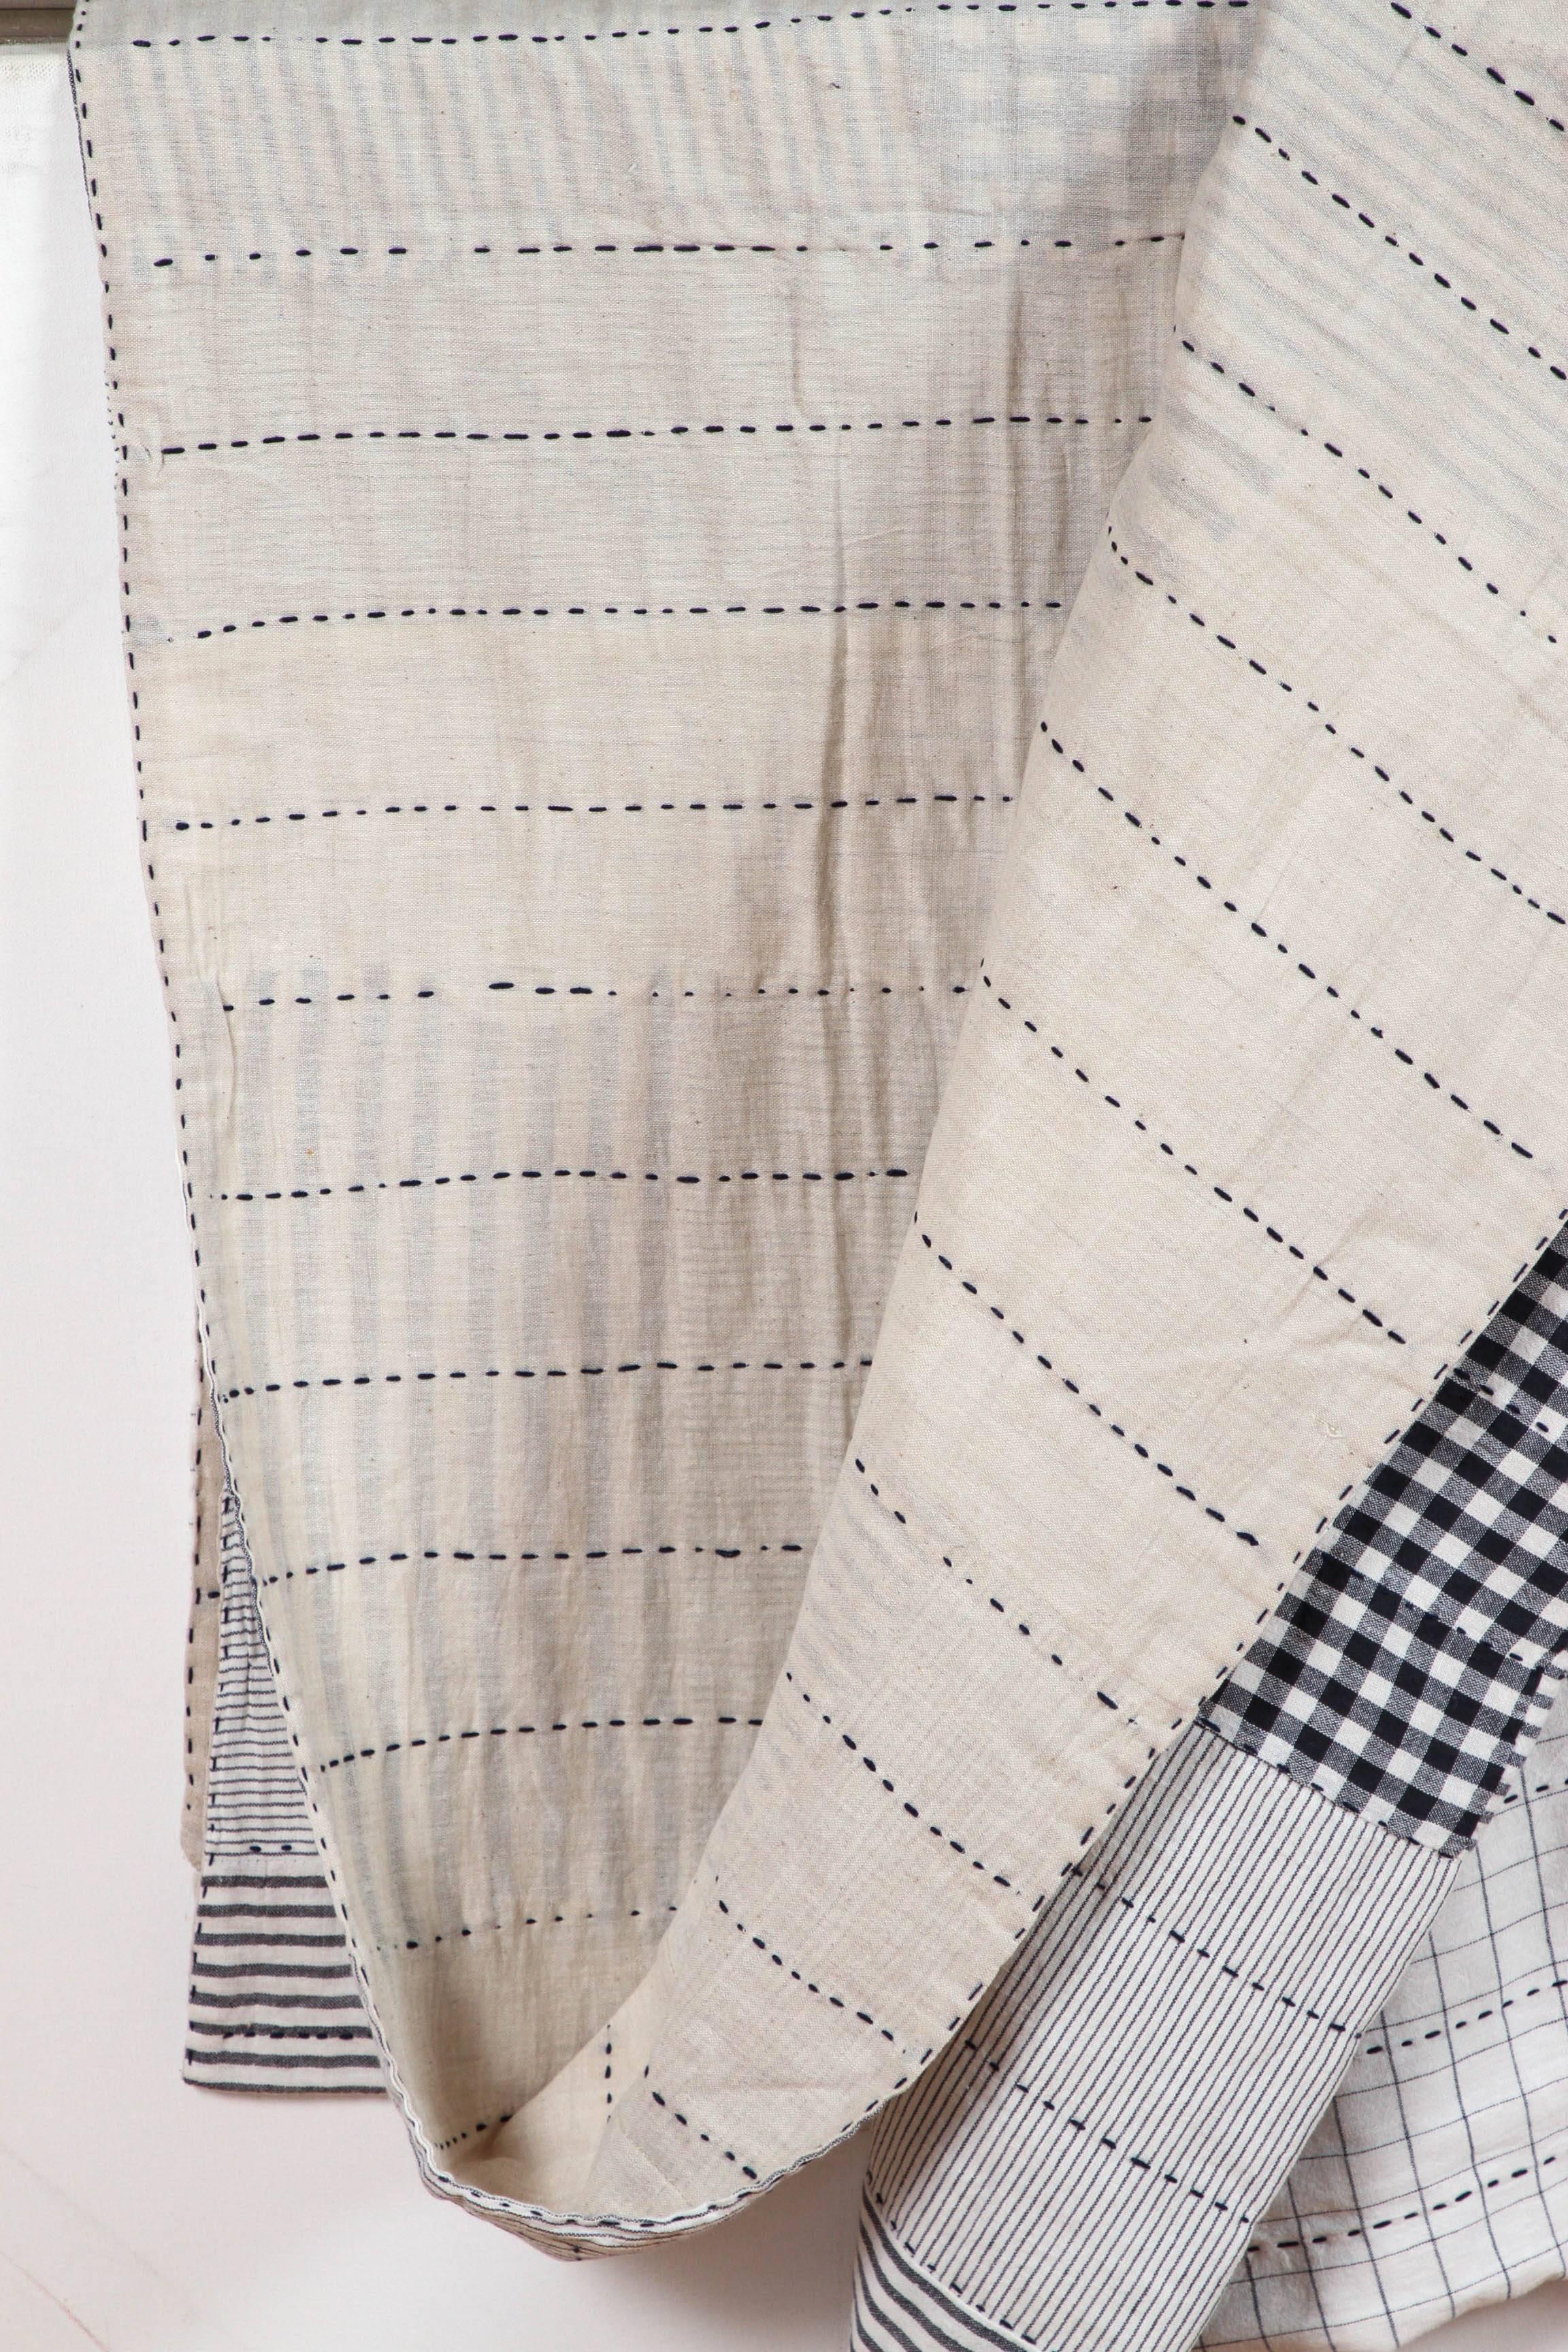 Indian Khadi Cloth Patchwork Quilt For Sale 1